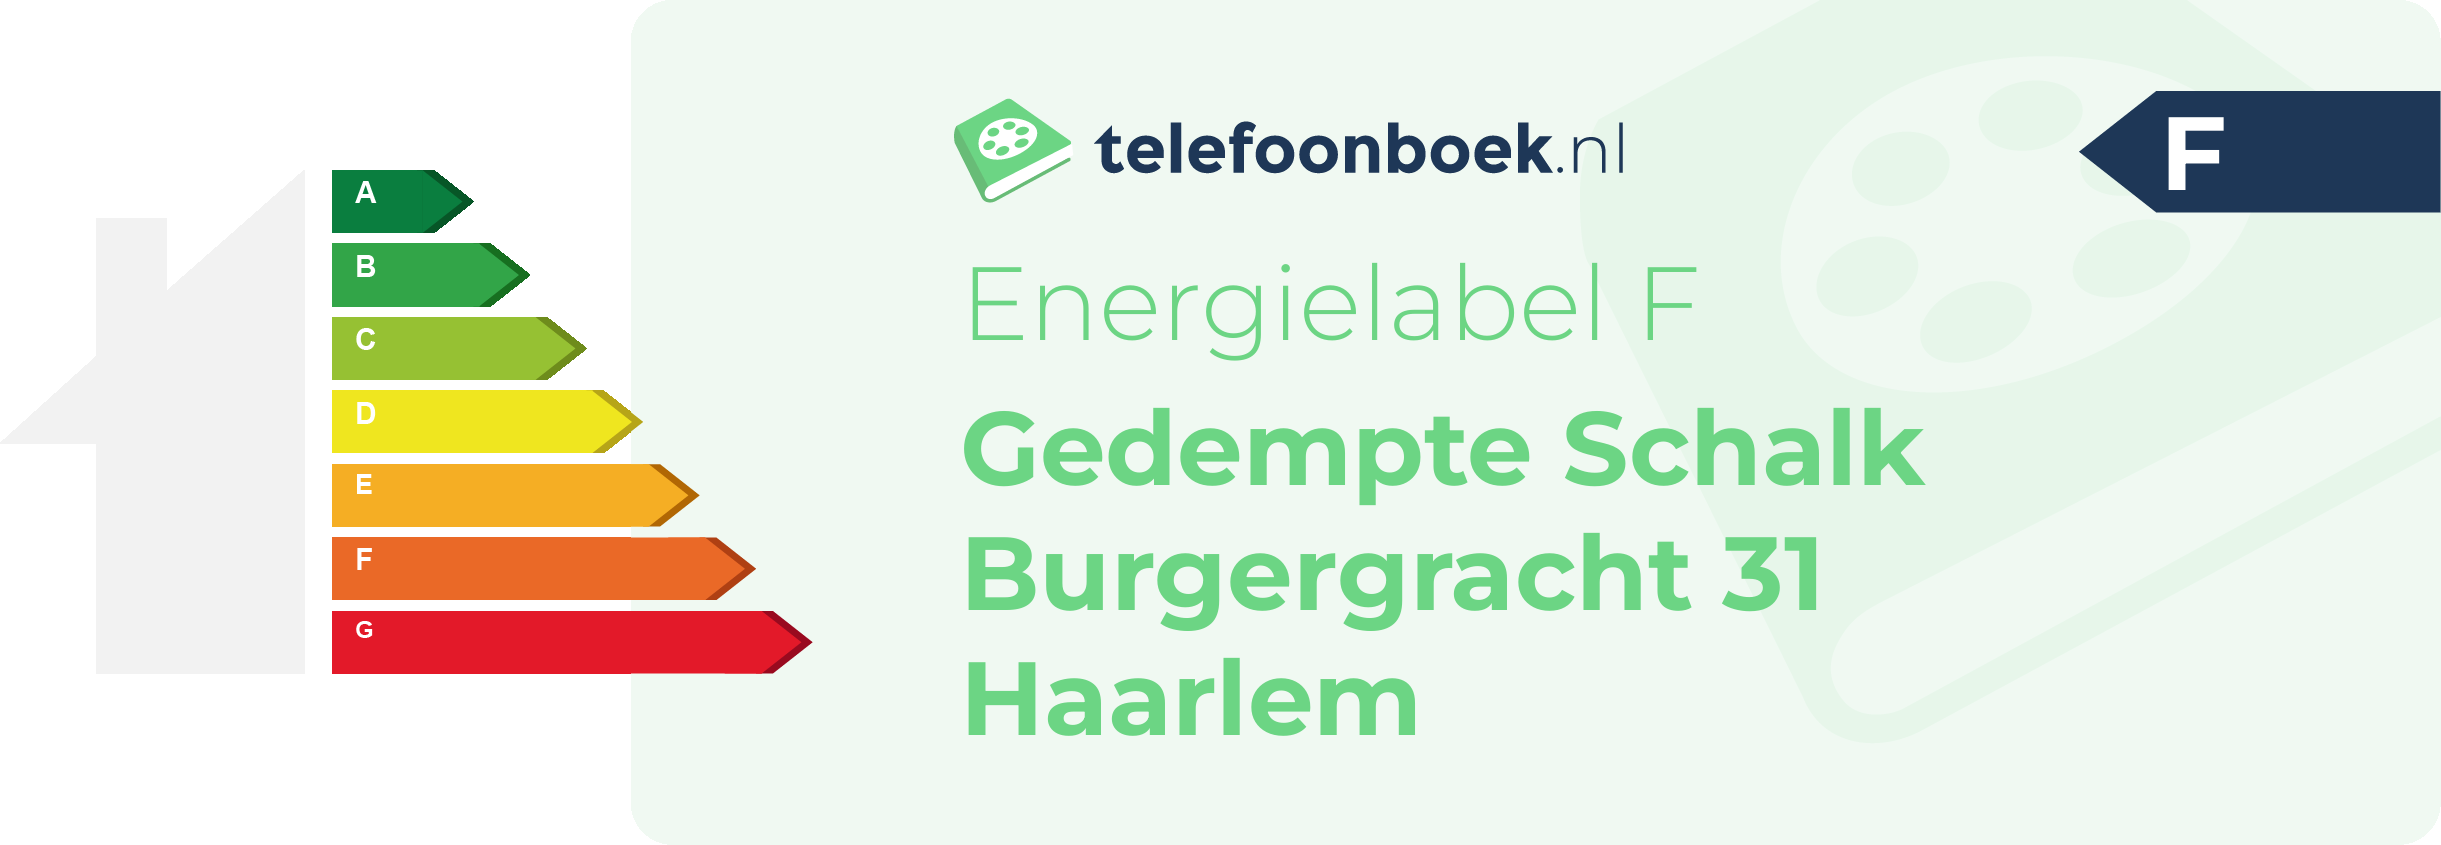 Energielabel Gedempte Schalk Burgergracht 31 Haarlem